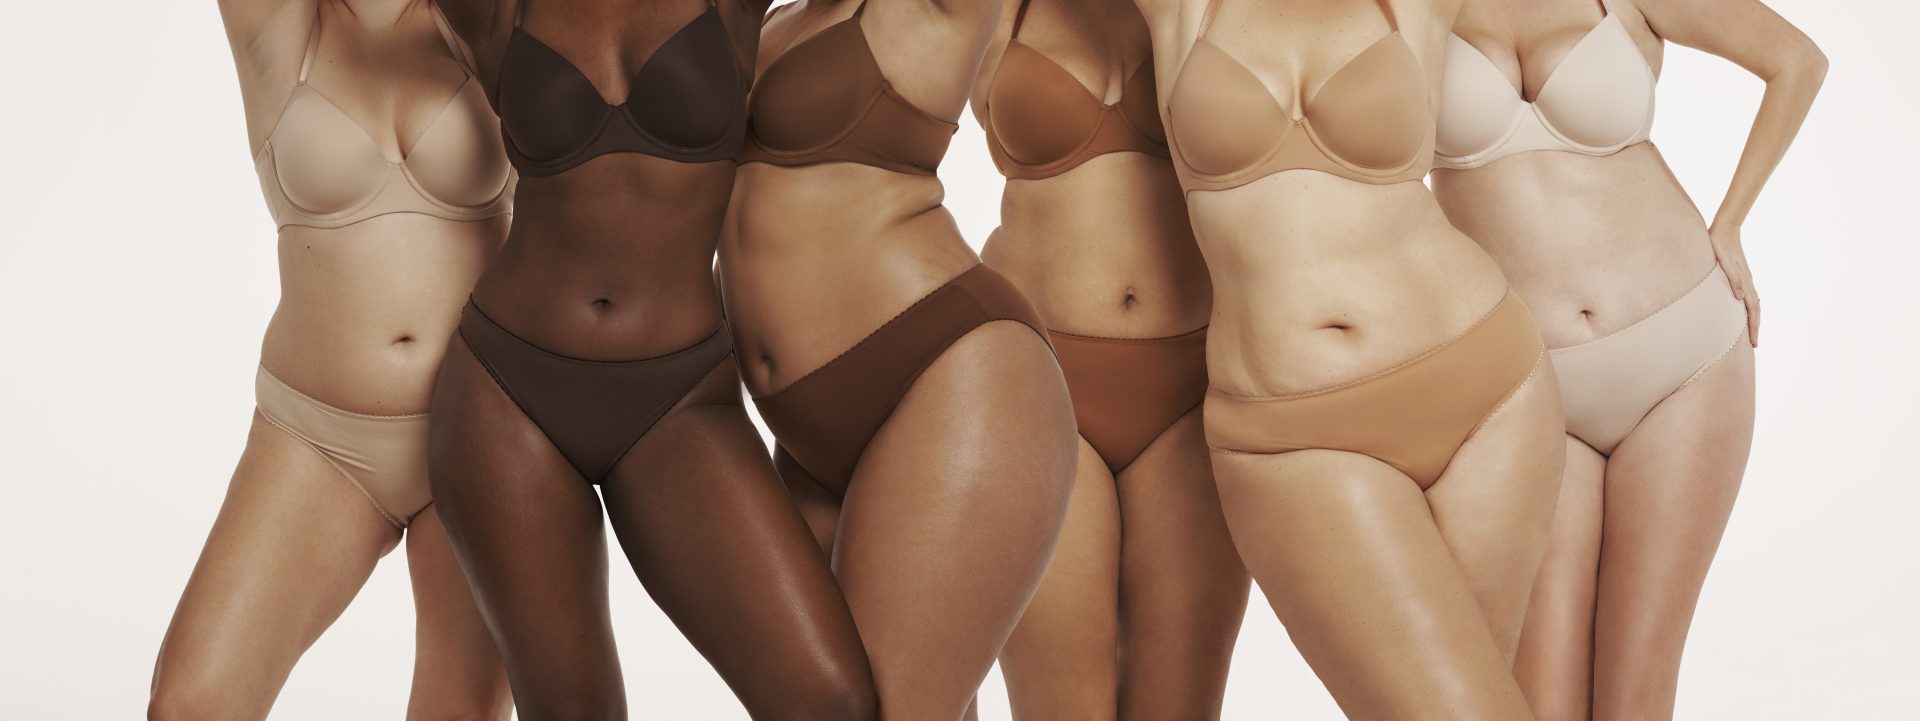 Sprede vores Bermad Meet the inclusive brands creating underwear to suit all skin tones